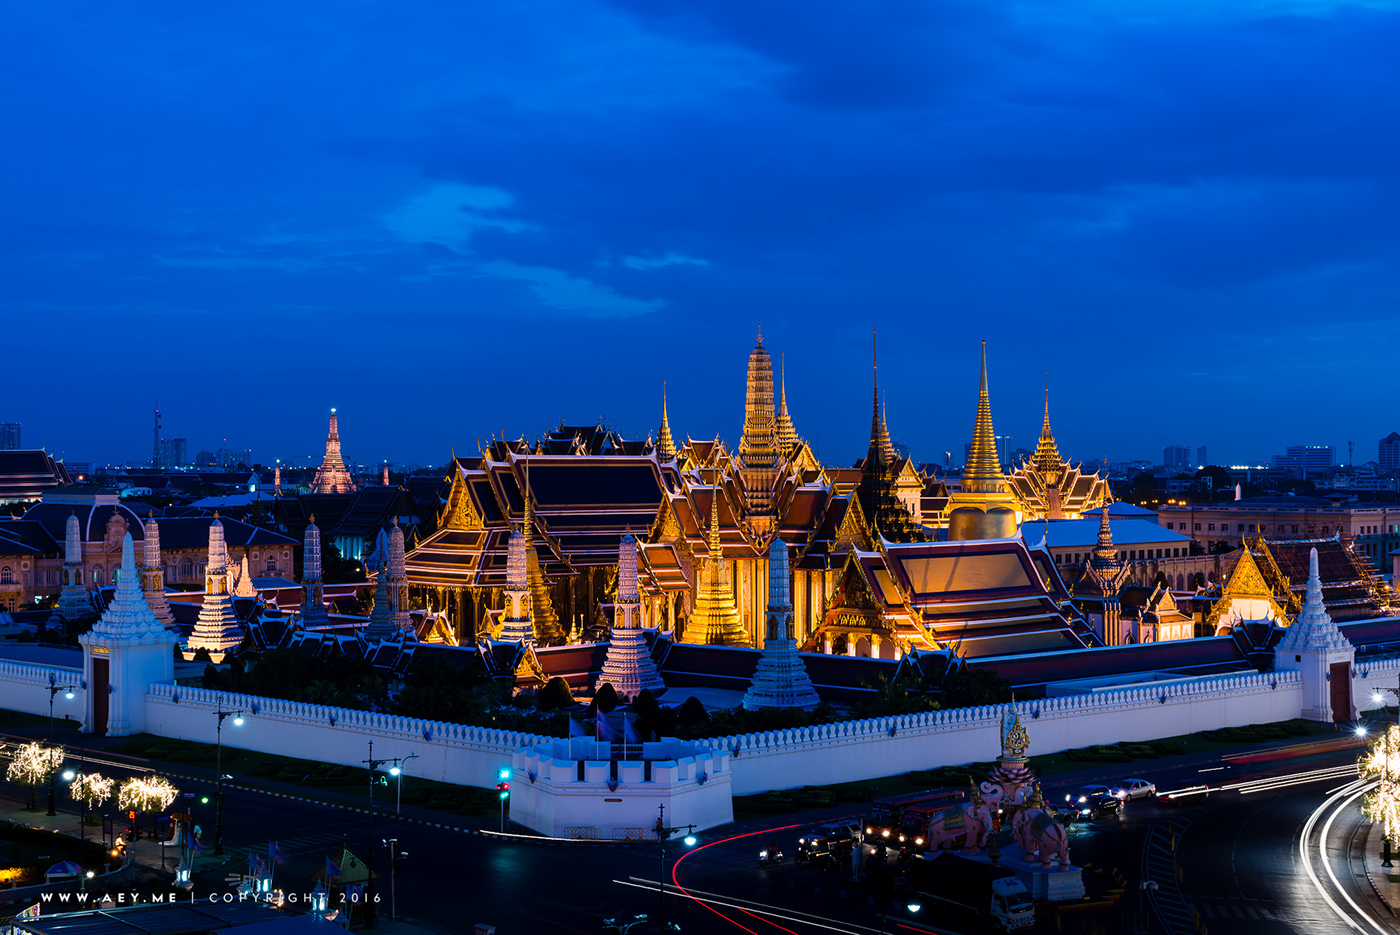 Thailand Thai Architecture Wat temple Bangkok Rattanakosin buddhism